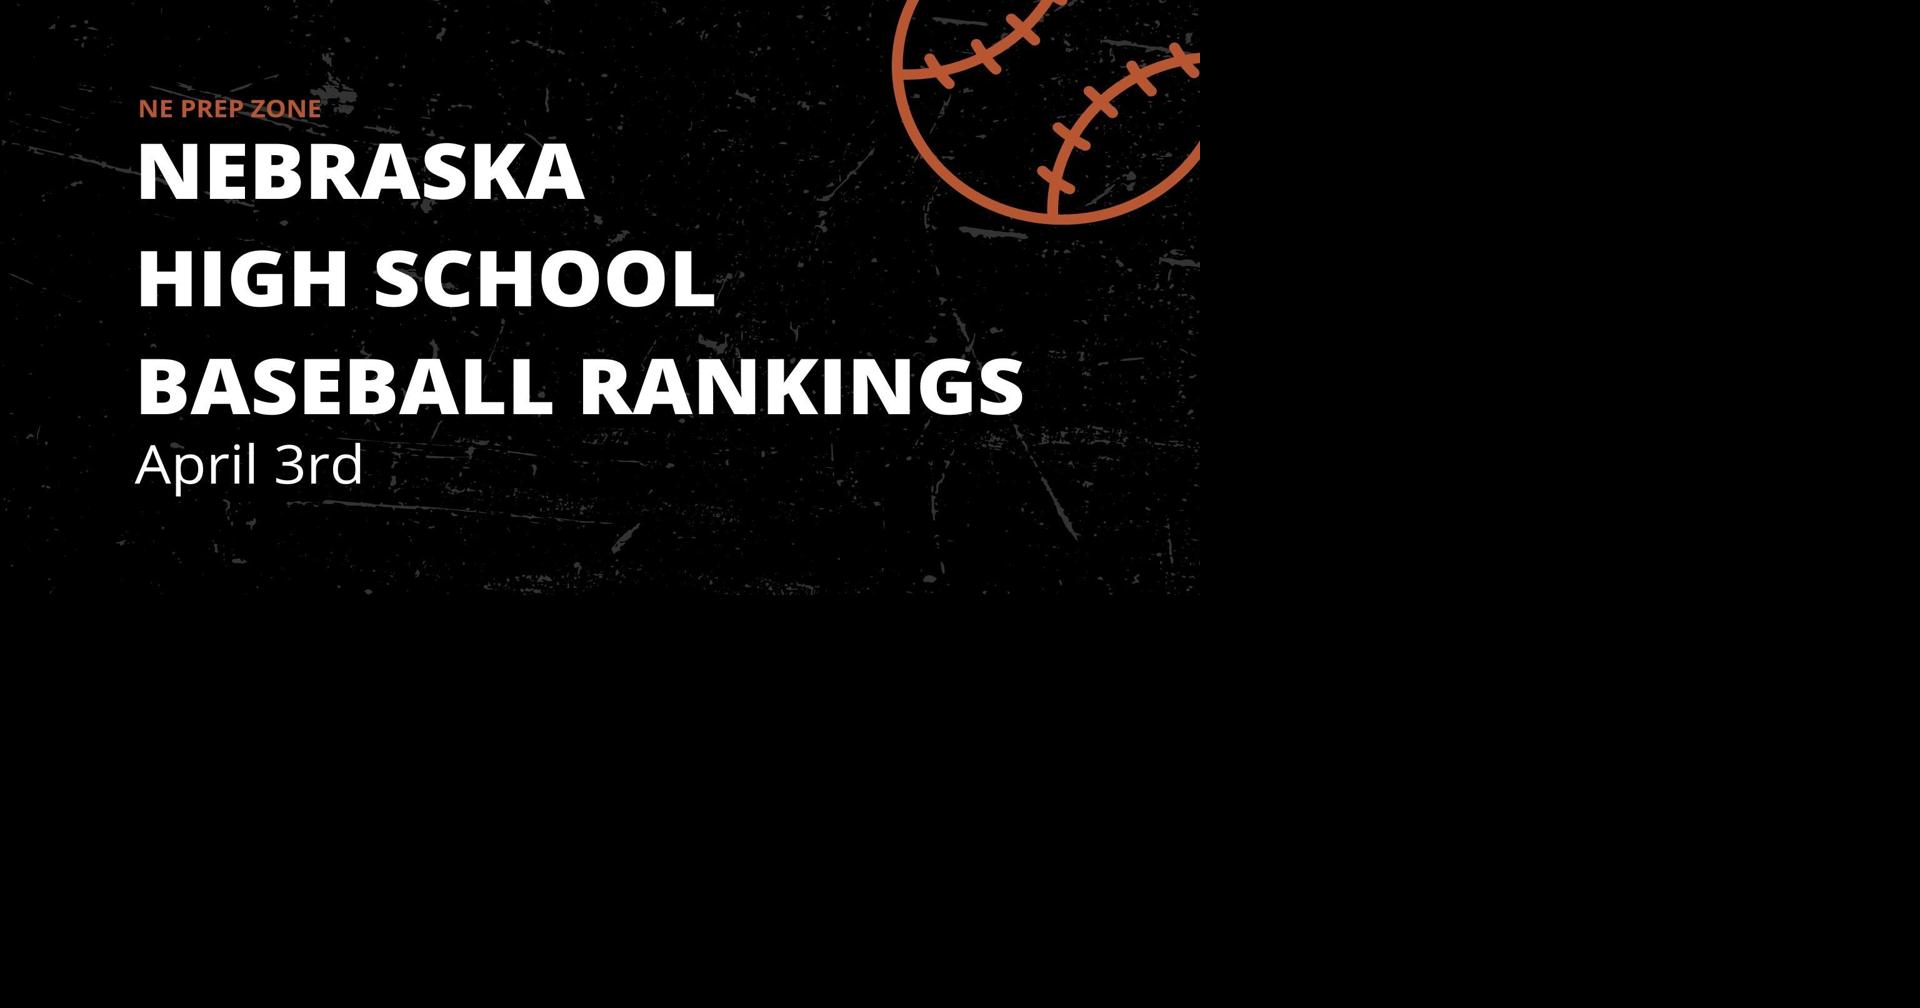 Nebraska high school baseball rankings, April 3rd